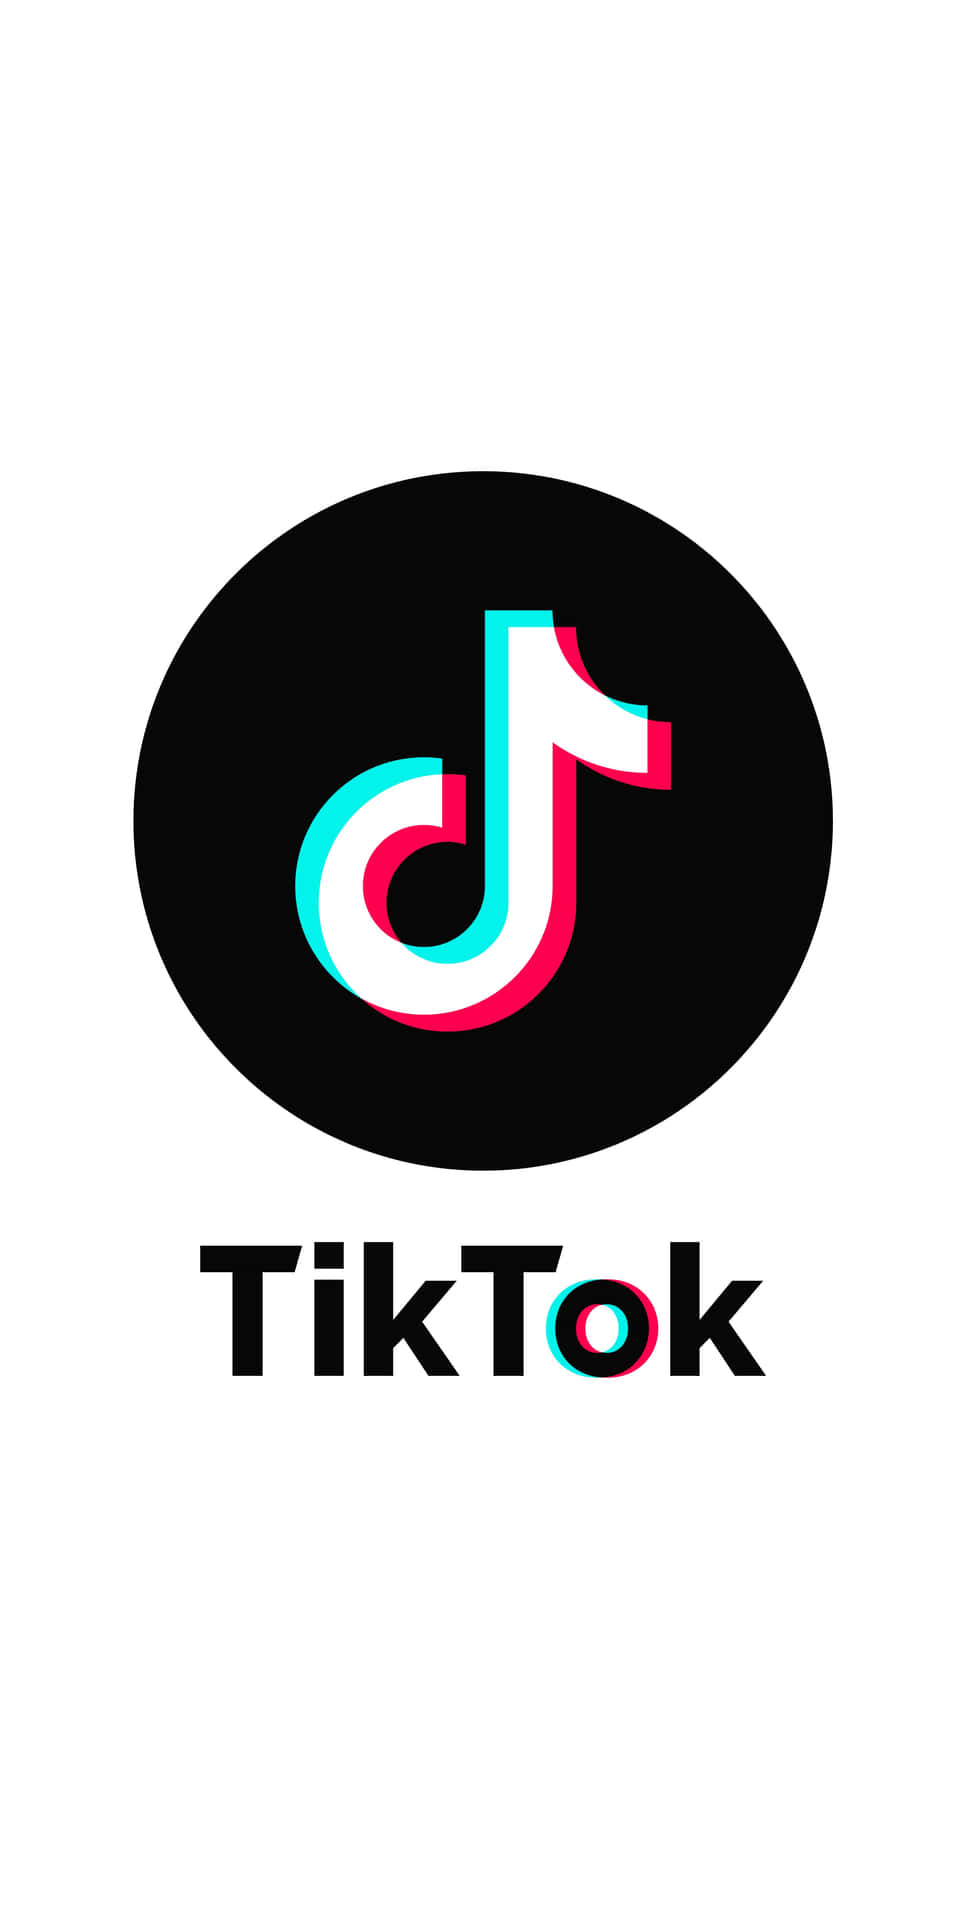 TikTok Live Wallpaper Apk Download for Android- Latest version 28.4-  com.ss.android.ugc.tiktok.livewallpaper